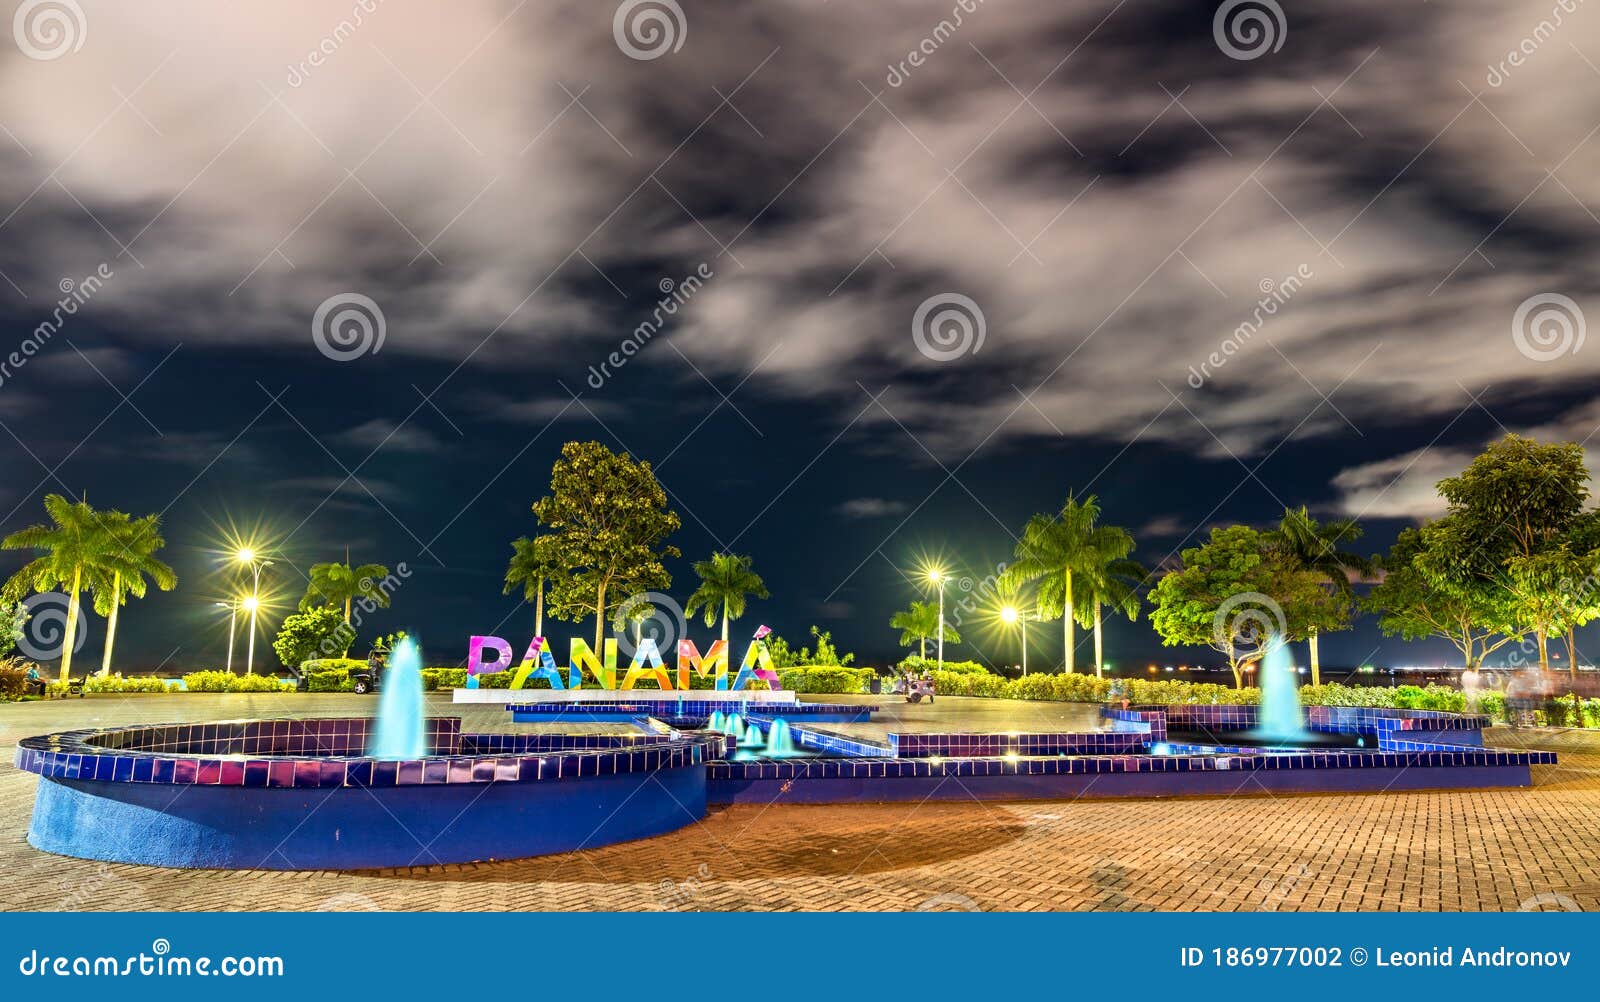 panama sign at amador causeway in panama city